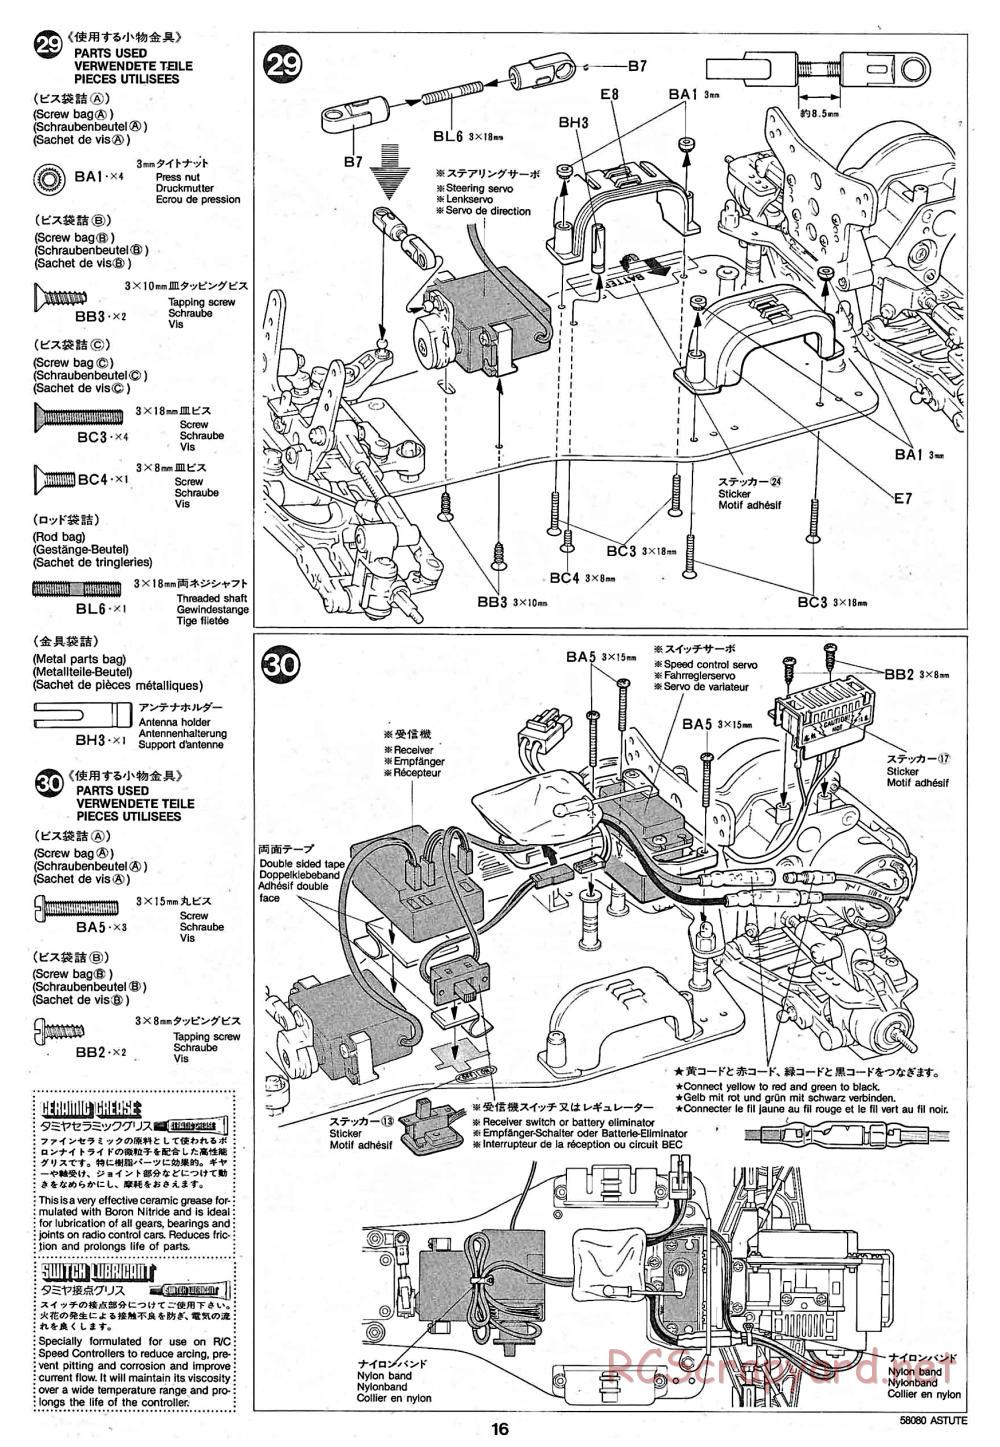 Tamiya - Astute - 58080 - Manual - Page 16